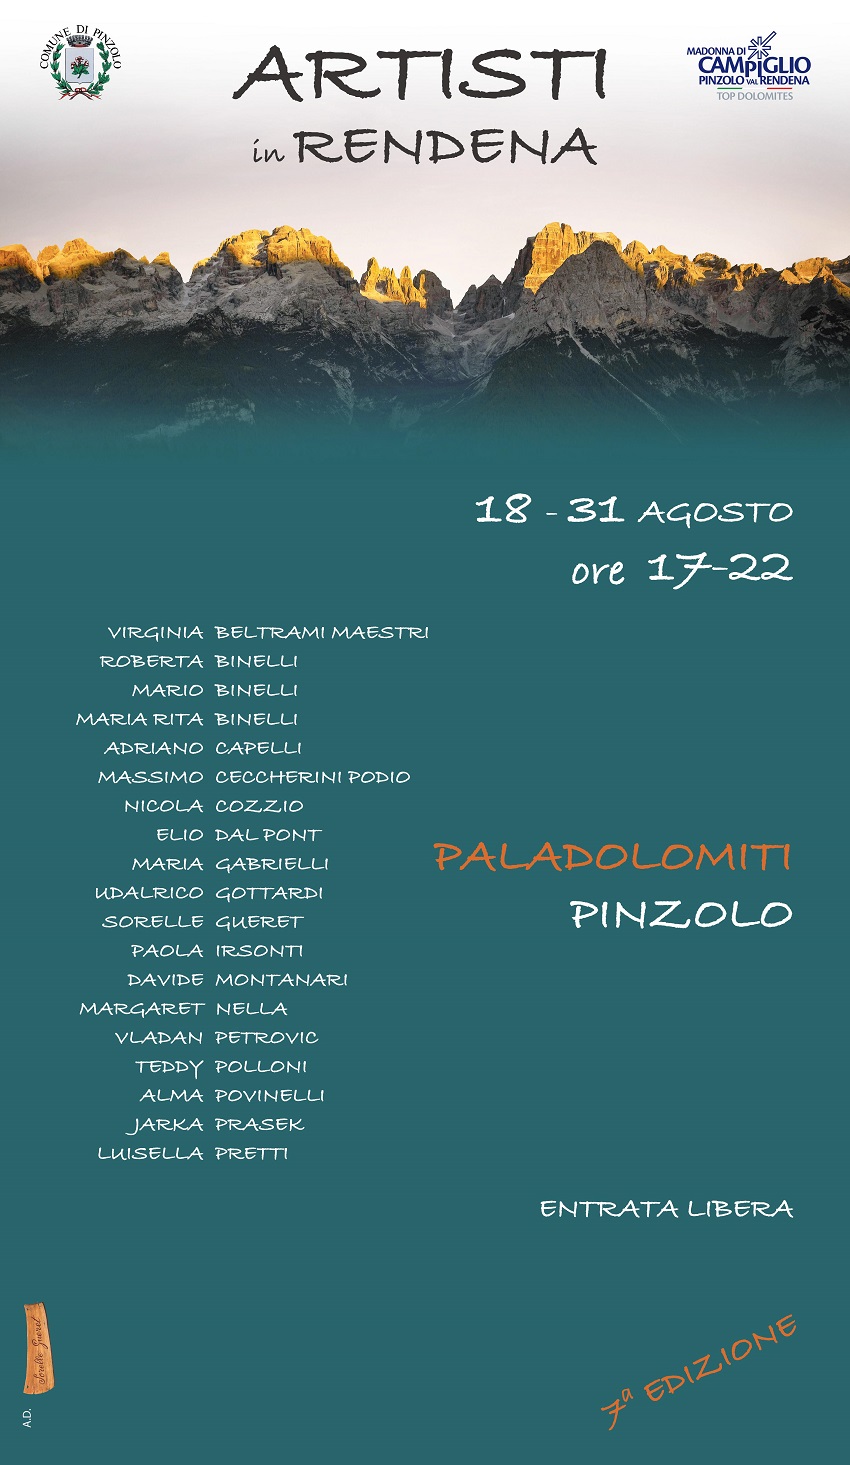 Artisti in Rendena – Dal 18 al 31 agosto 2020 al PalaDolomiti